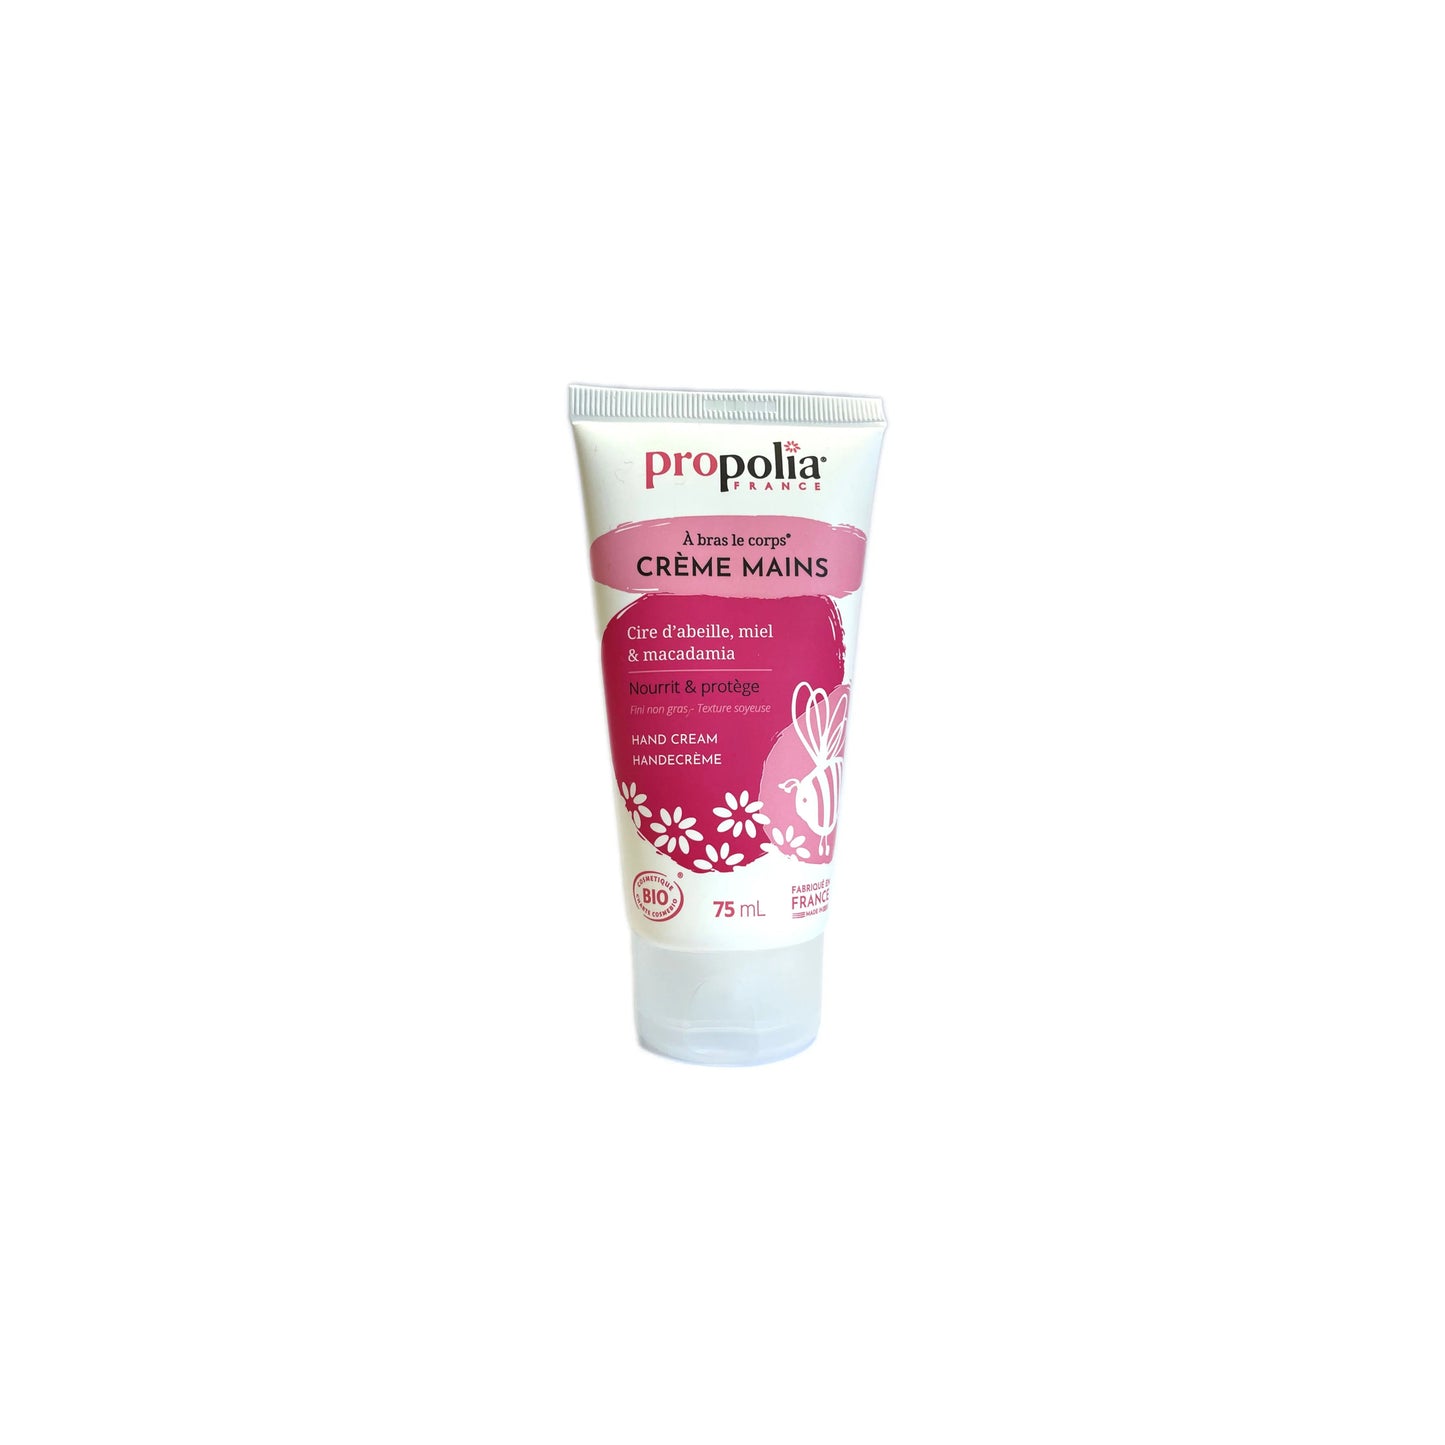 Bio Propolis handcrème 75ml Propolia - Honingwinkel